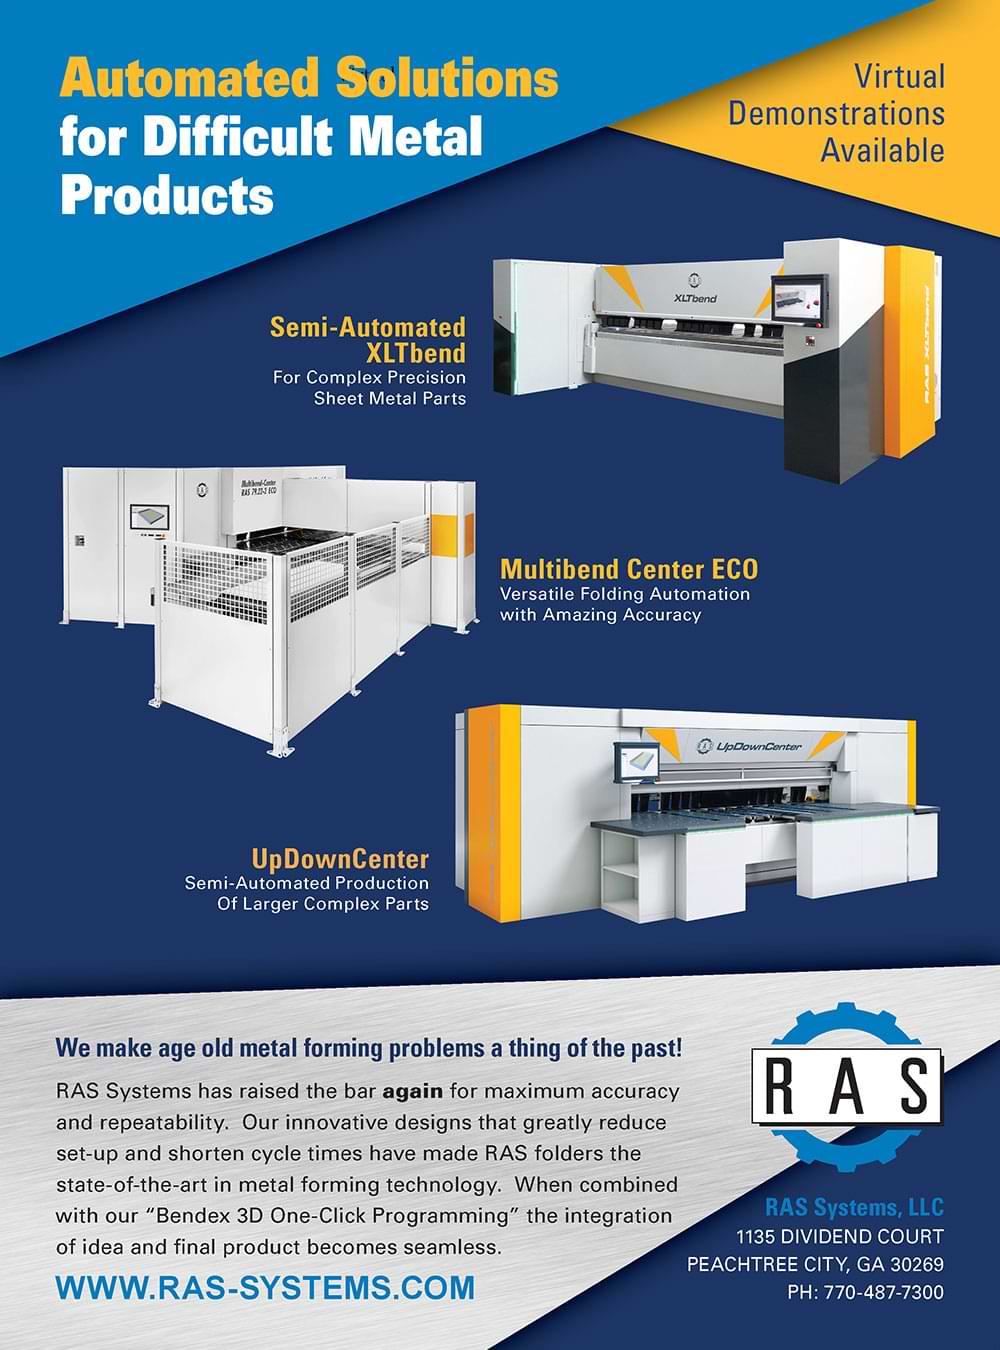 RAS Systems, LLC Advertisement